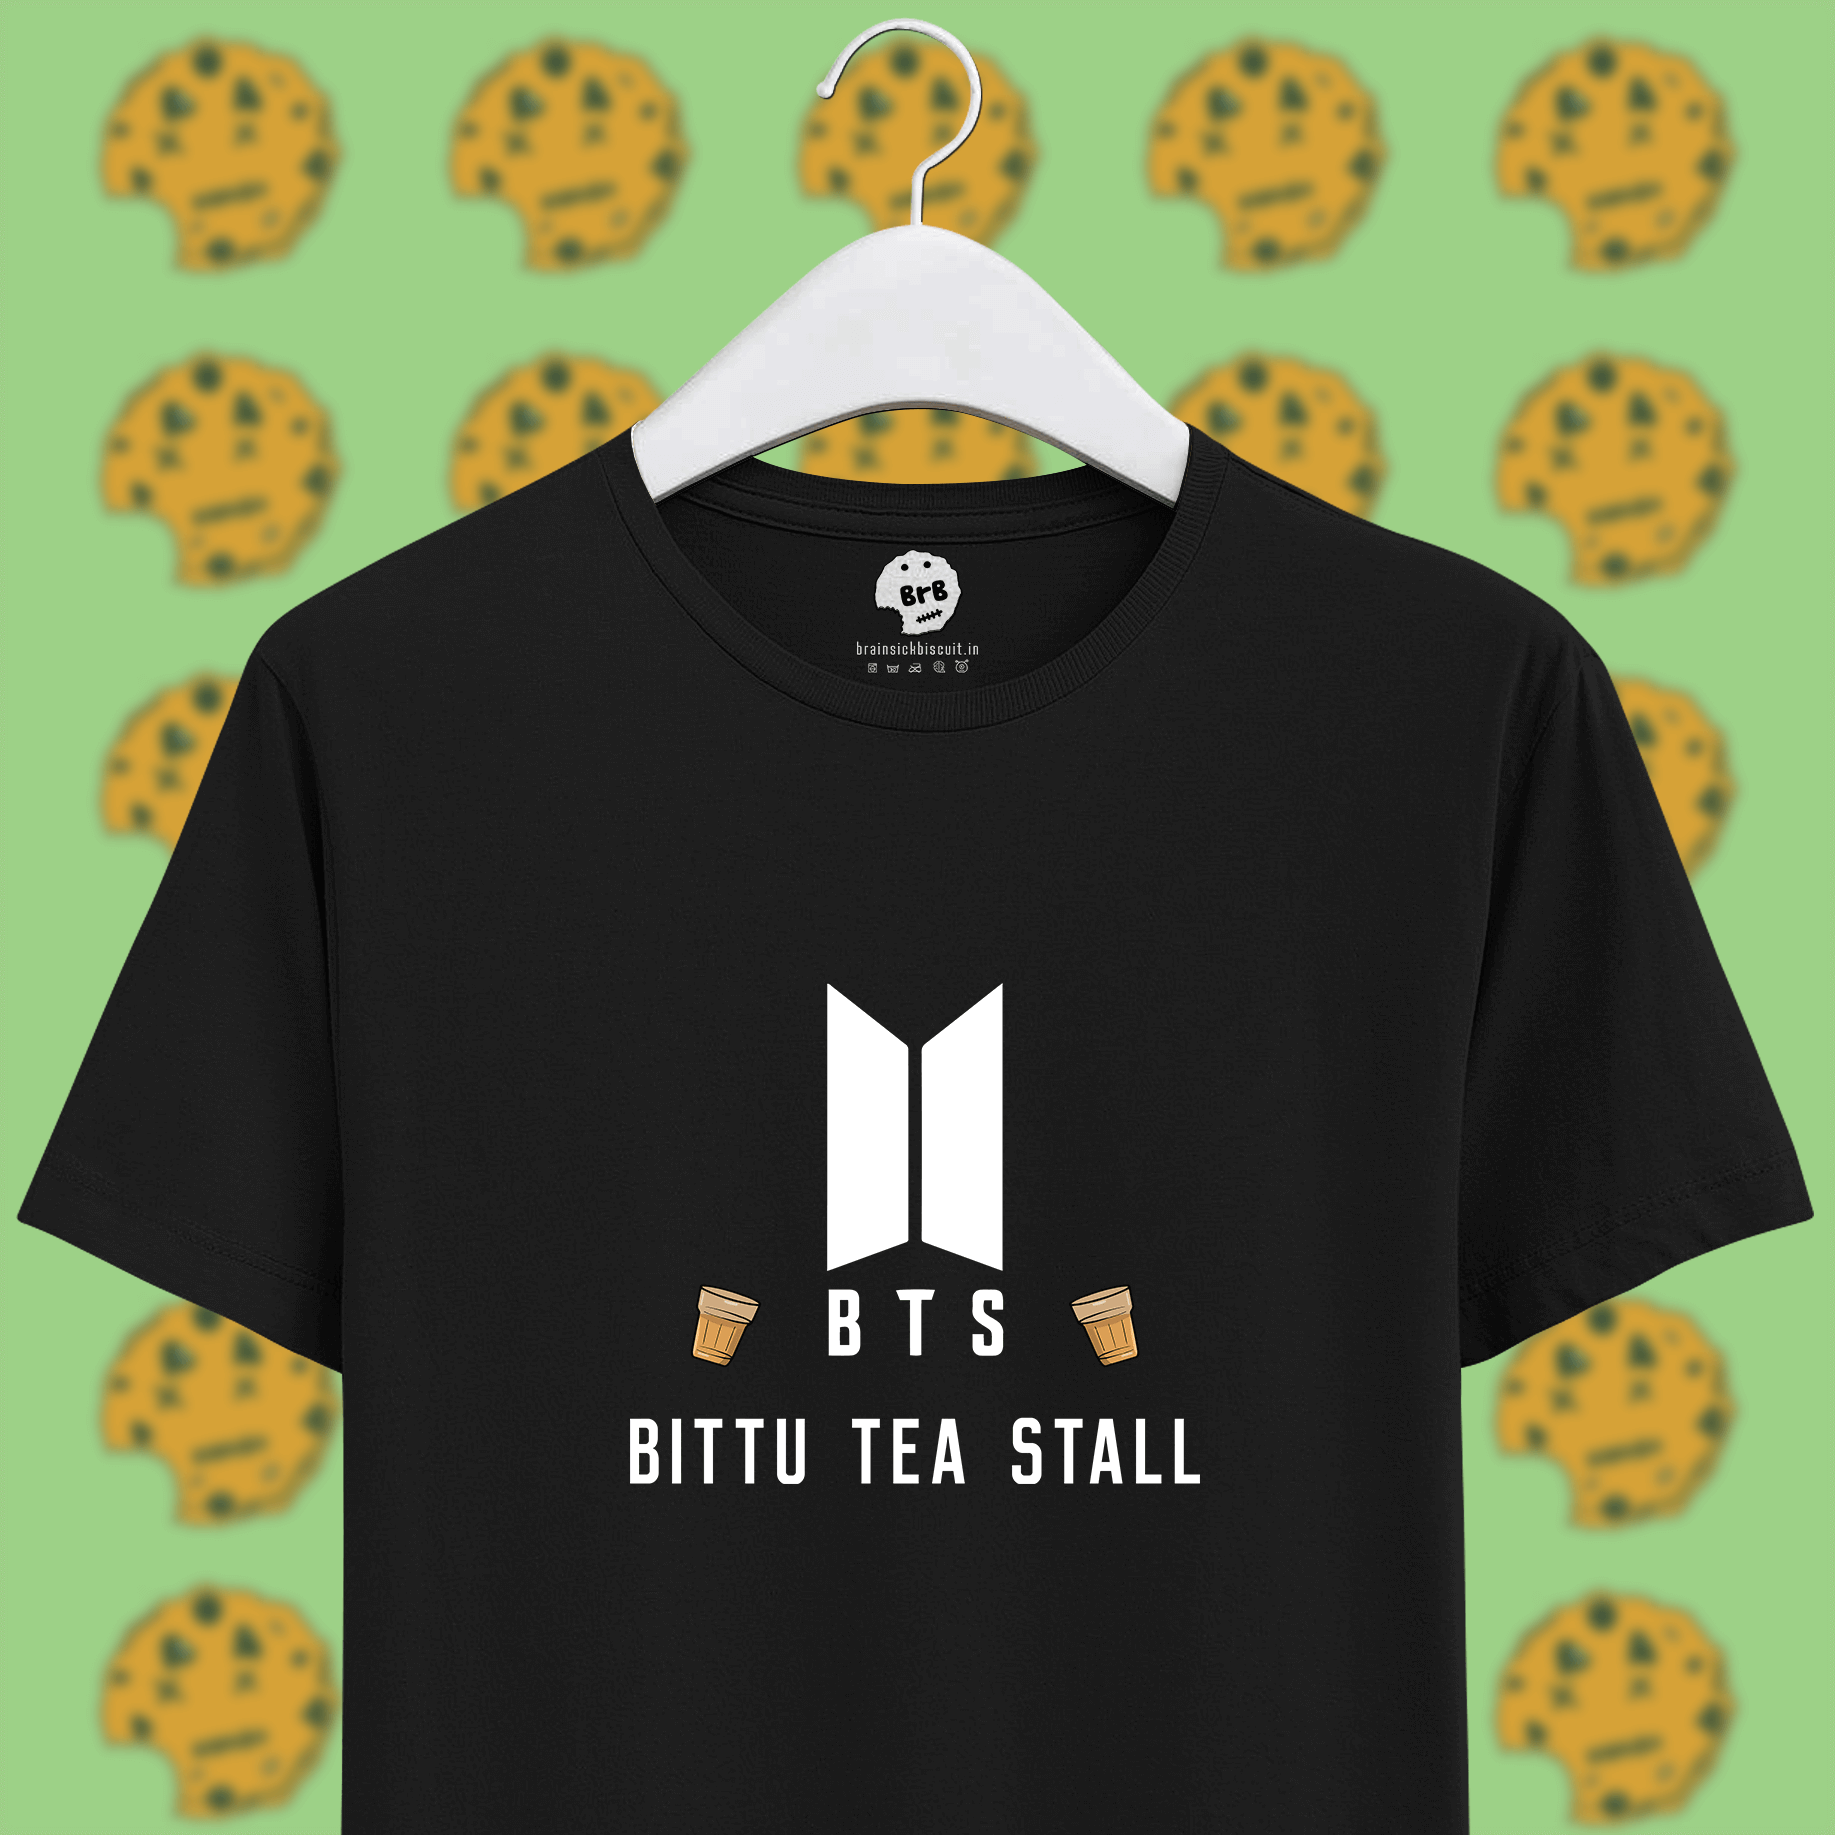 BTS logo with bittu tea stall joke on unisex black half sleeves cotton t-shirt.